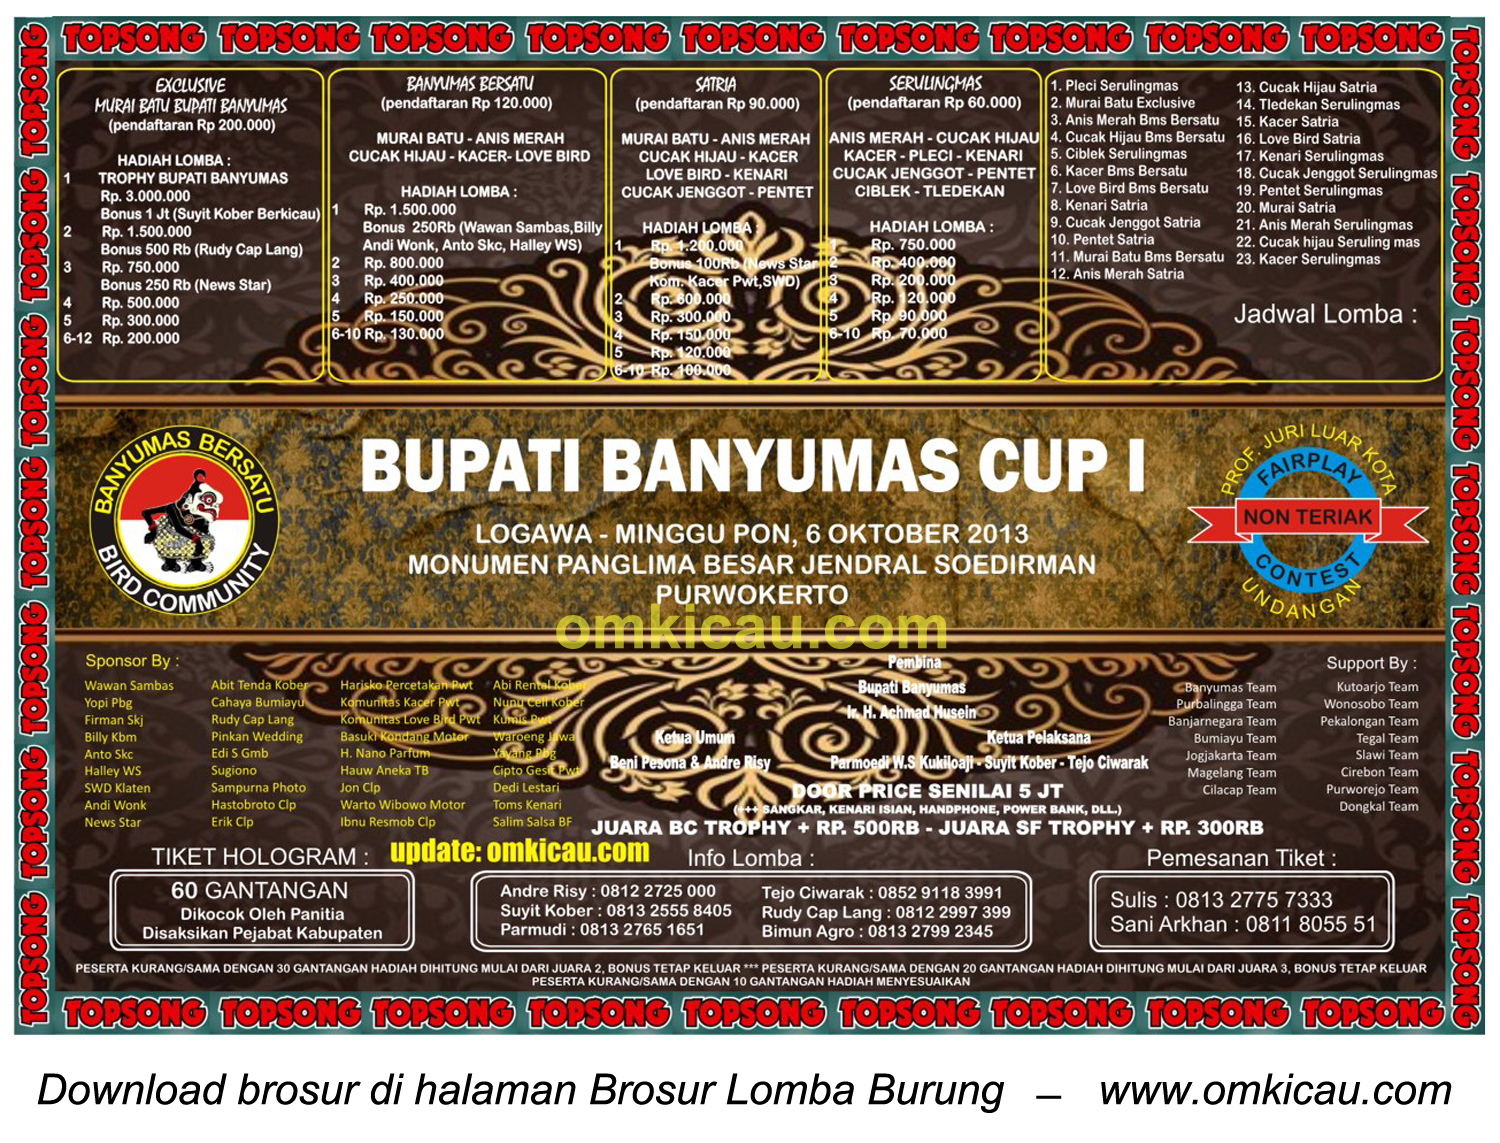 Brosur Lomba Burung Bupati Banyumas Cup I, Purwokerto, 6 Oktober 2013